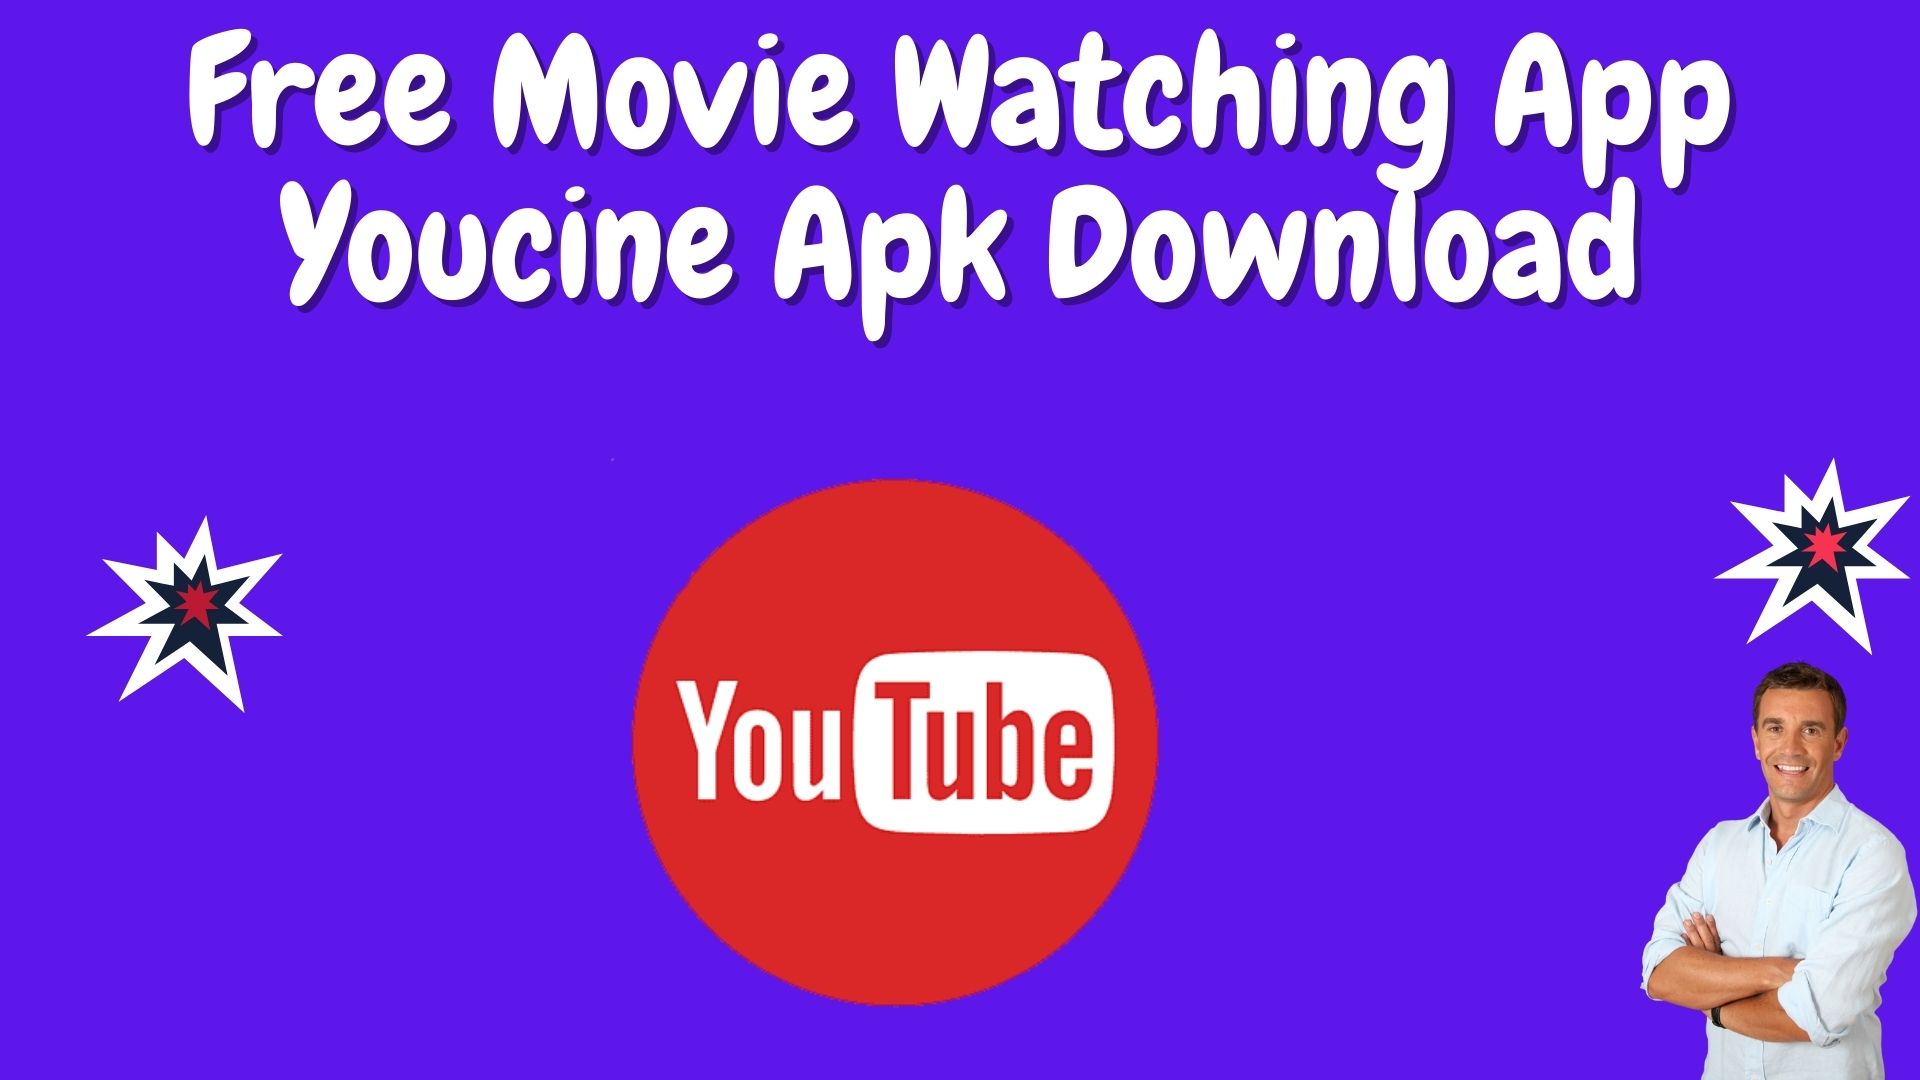 Free movie watching app youcine apk download